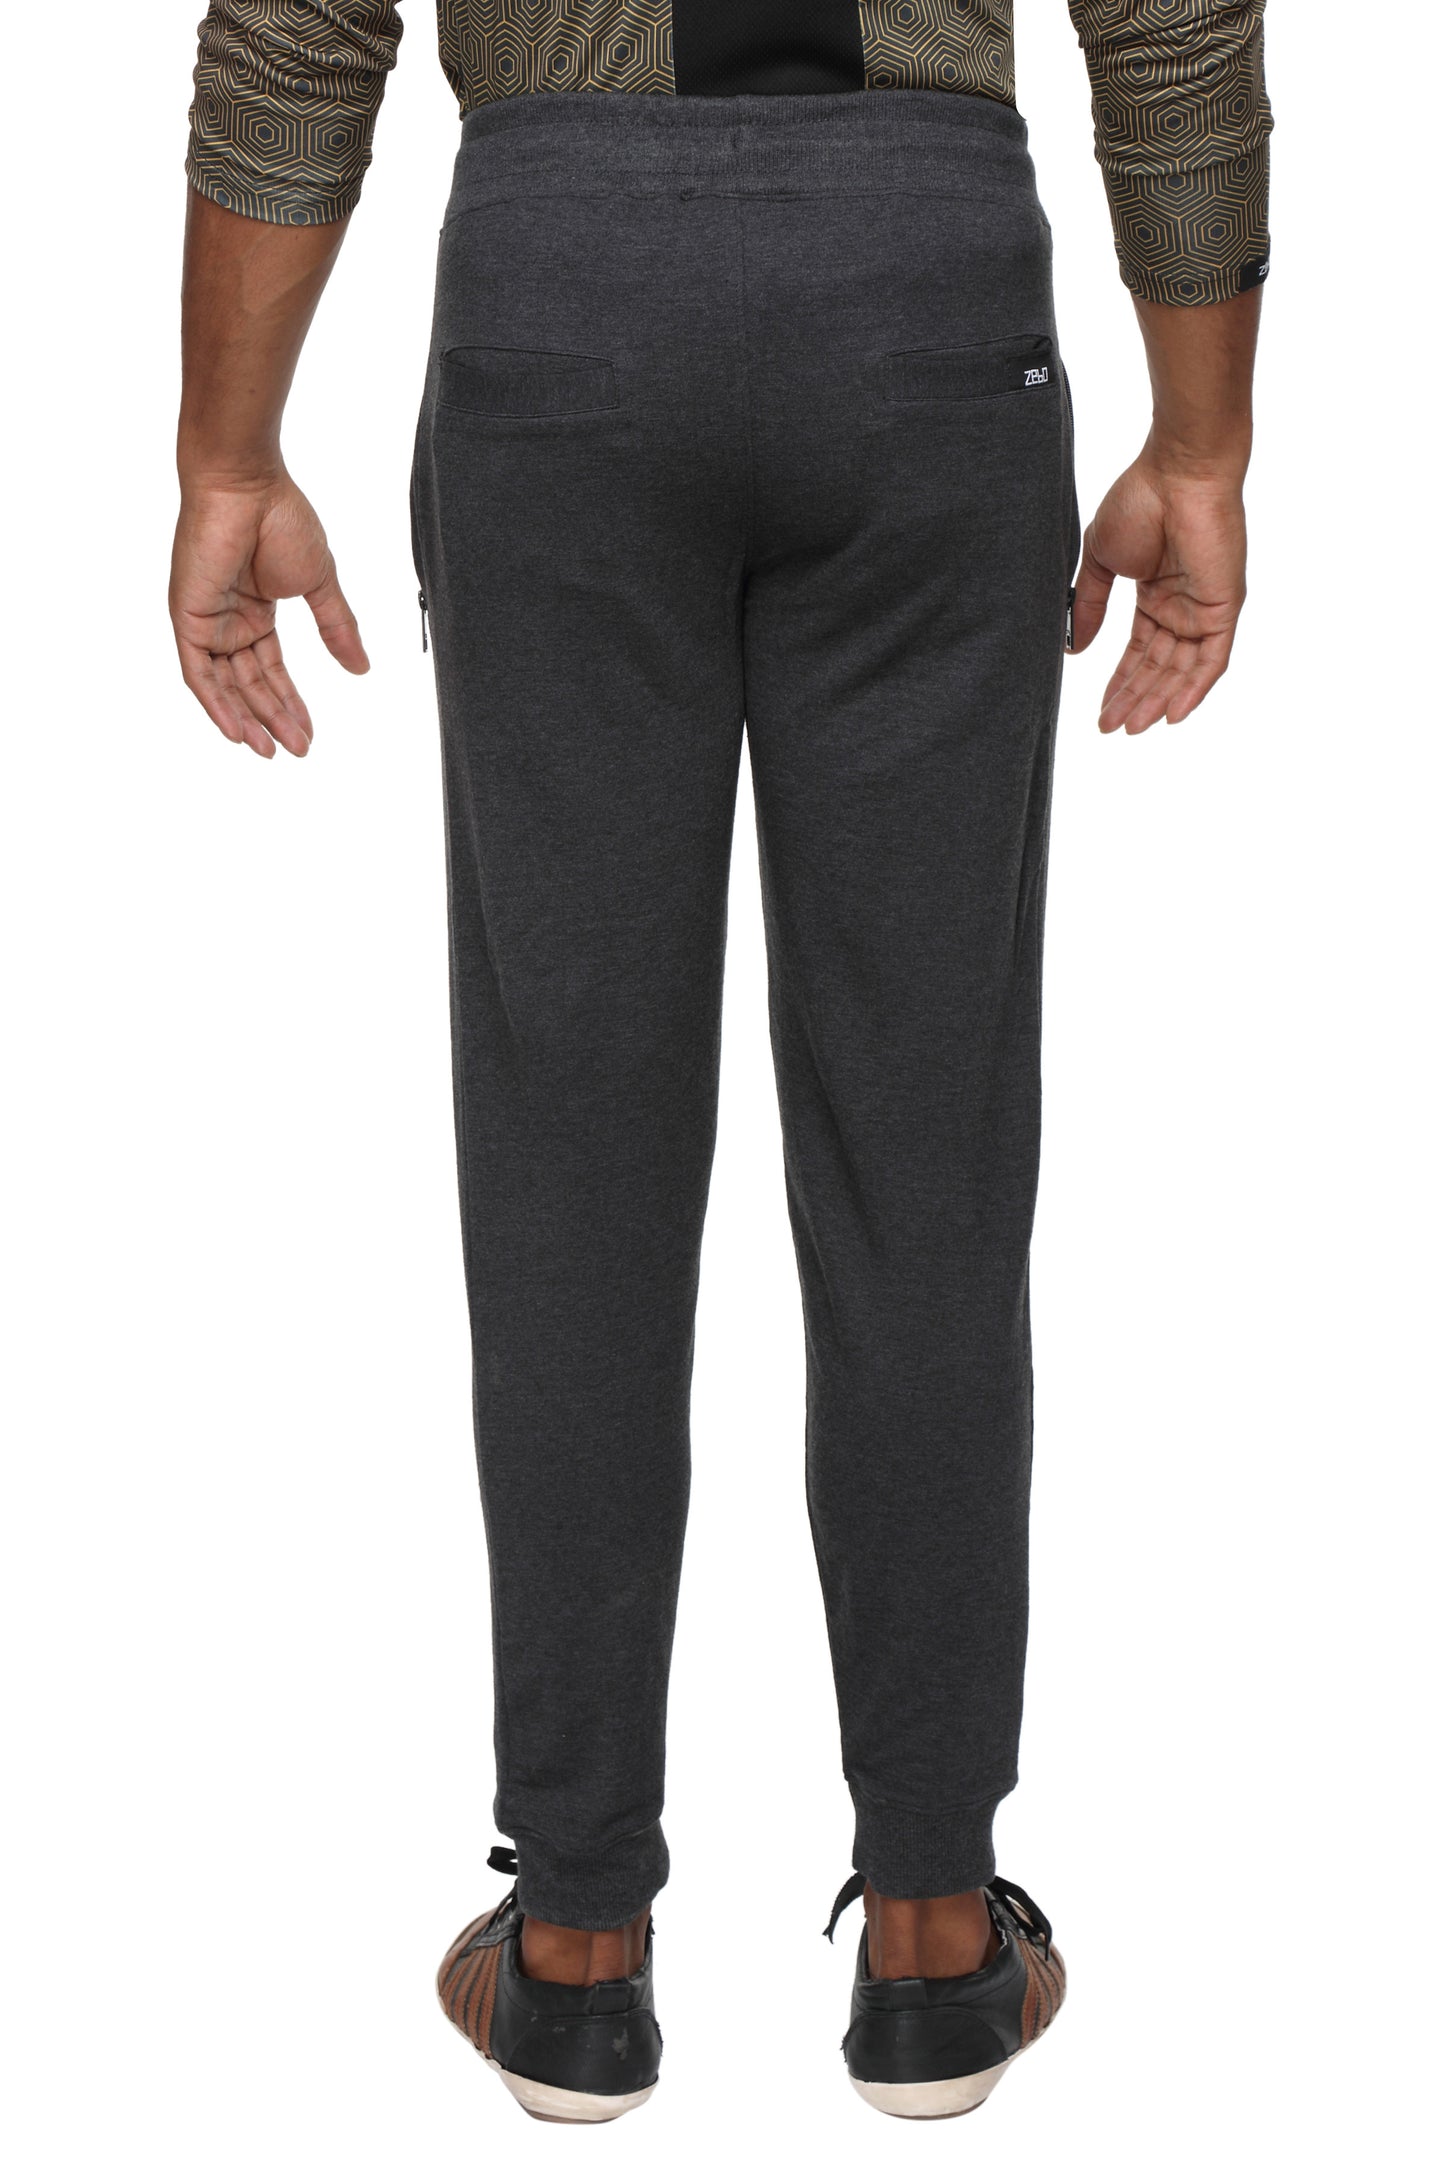 Slim fit cotton Joggers- Grey - Zebo Active Wear